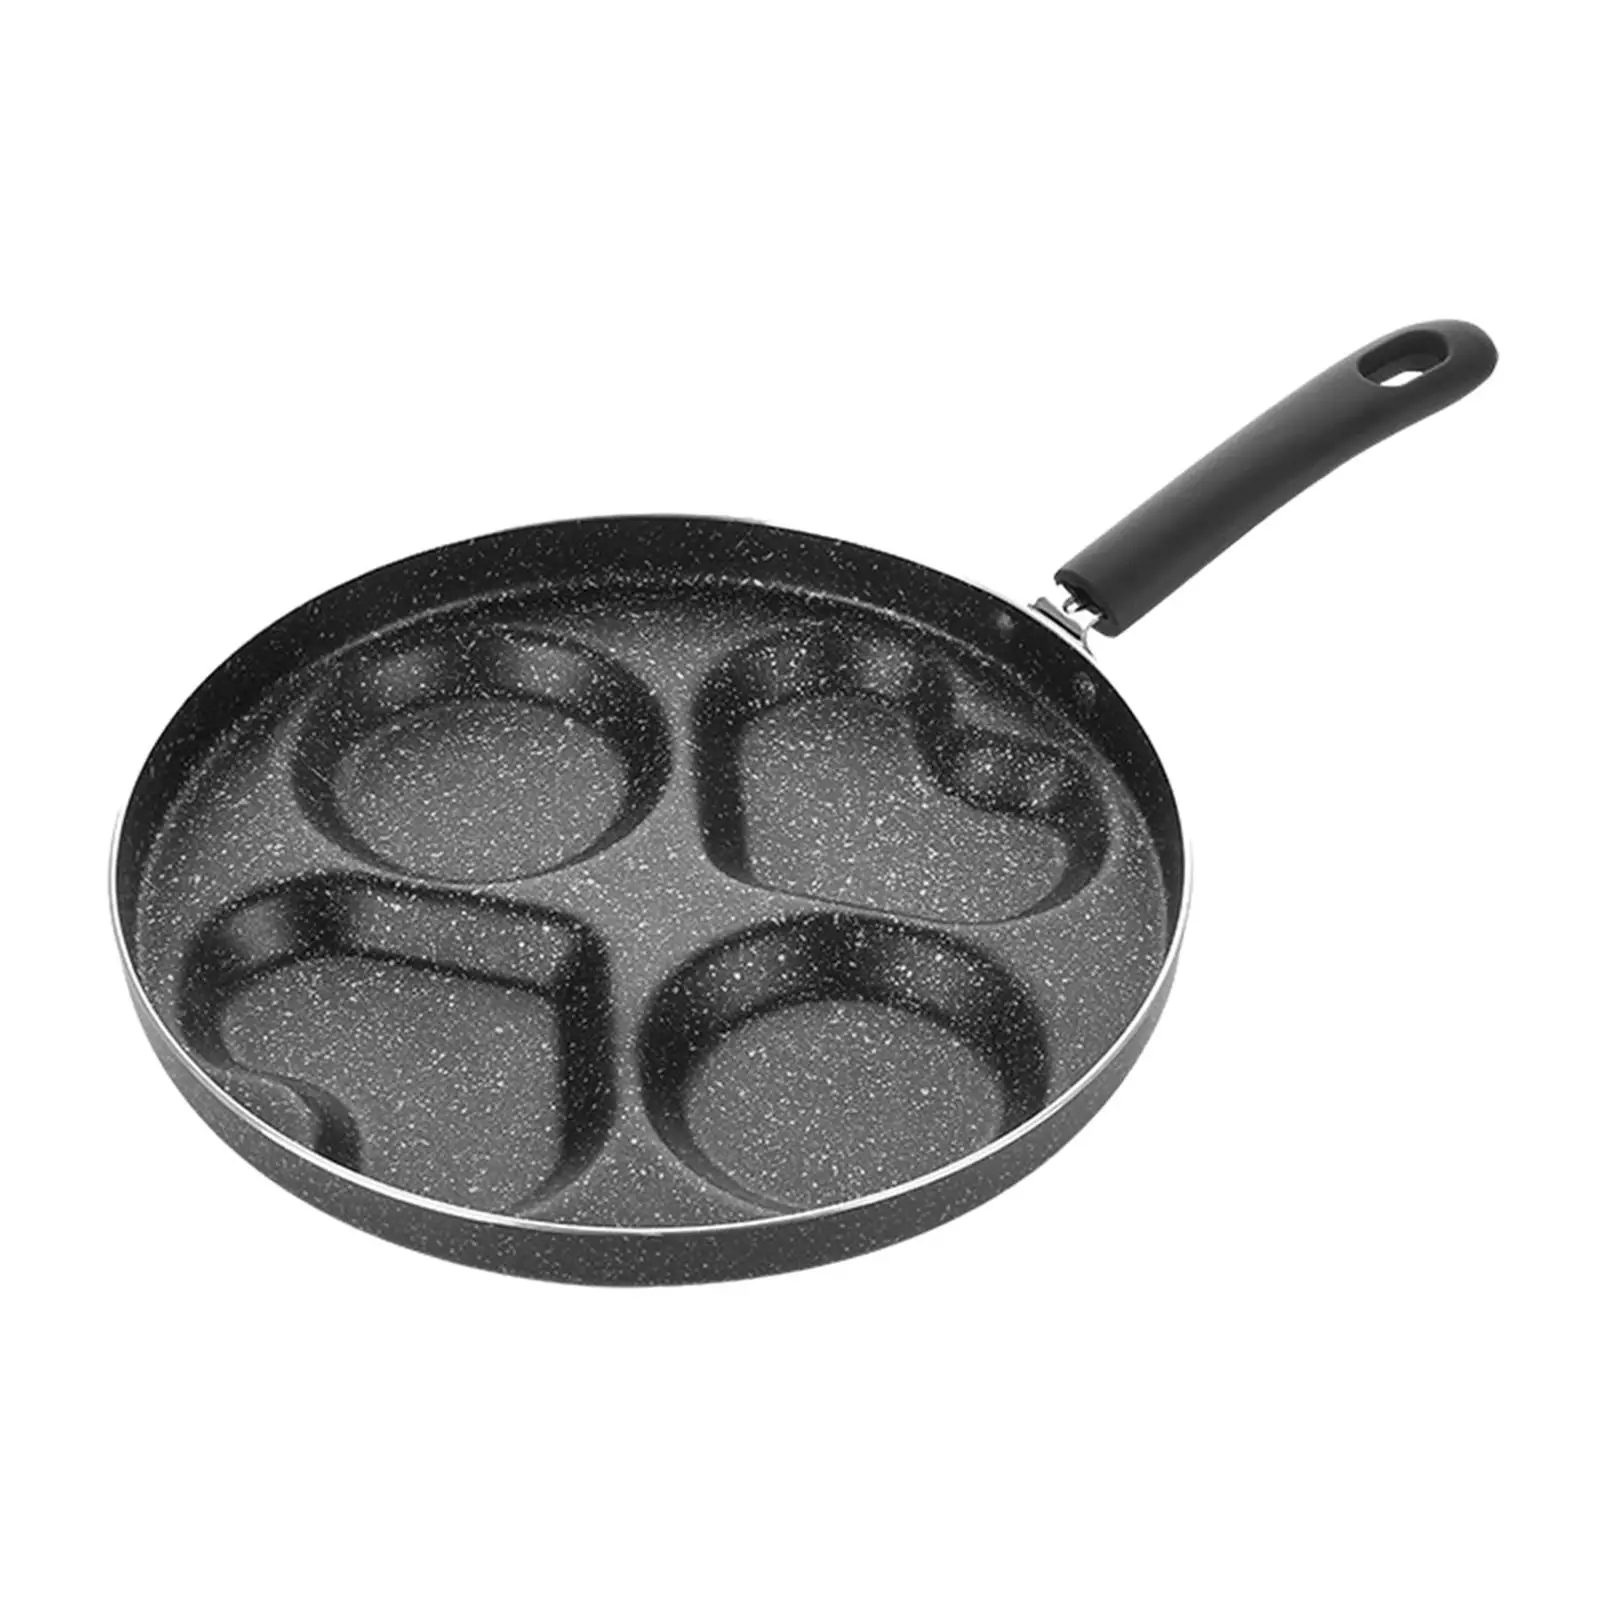 4 Hole Egg Frying Pan Non Stick Aluminum Alloy Medical Stone Coating Pancake Maker for Hotel Restaurants Kitchen Household